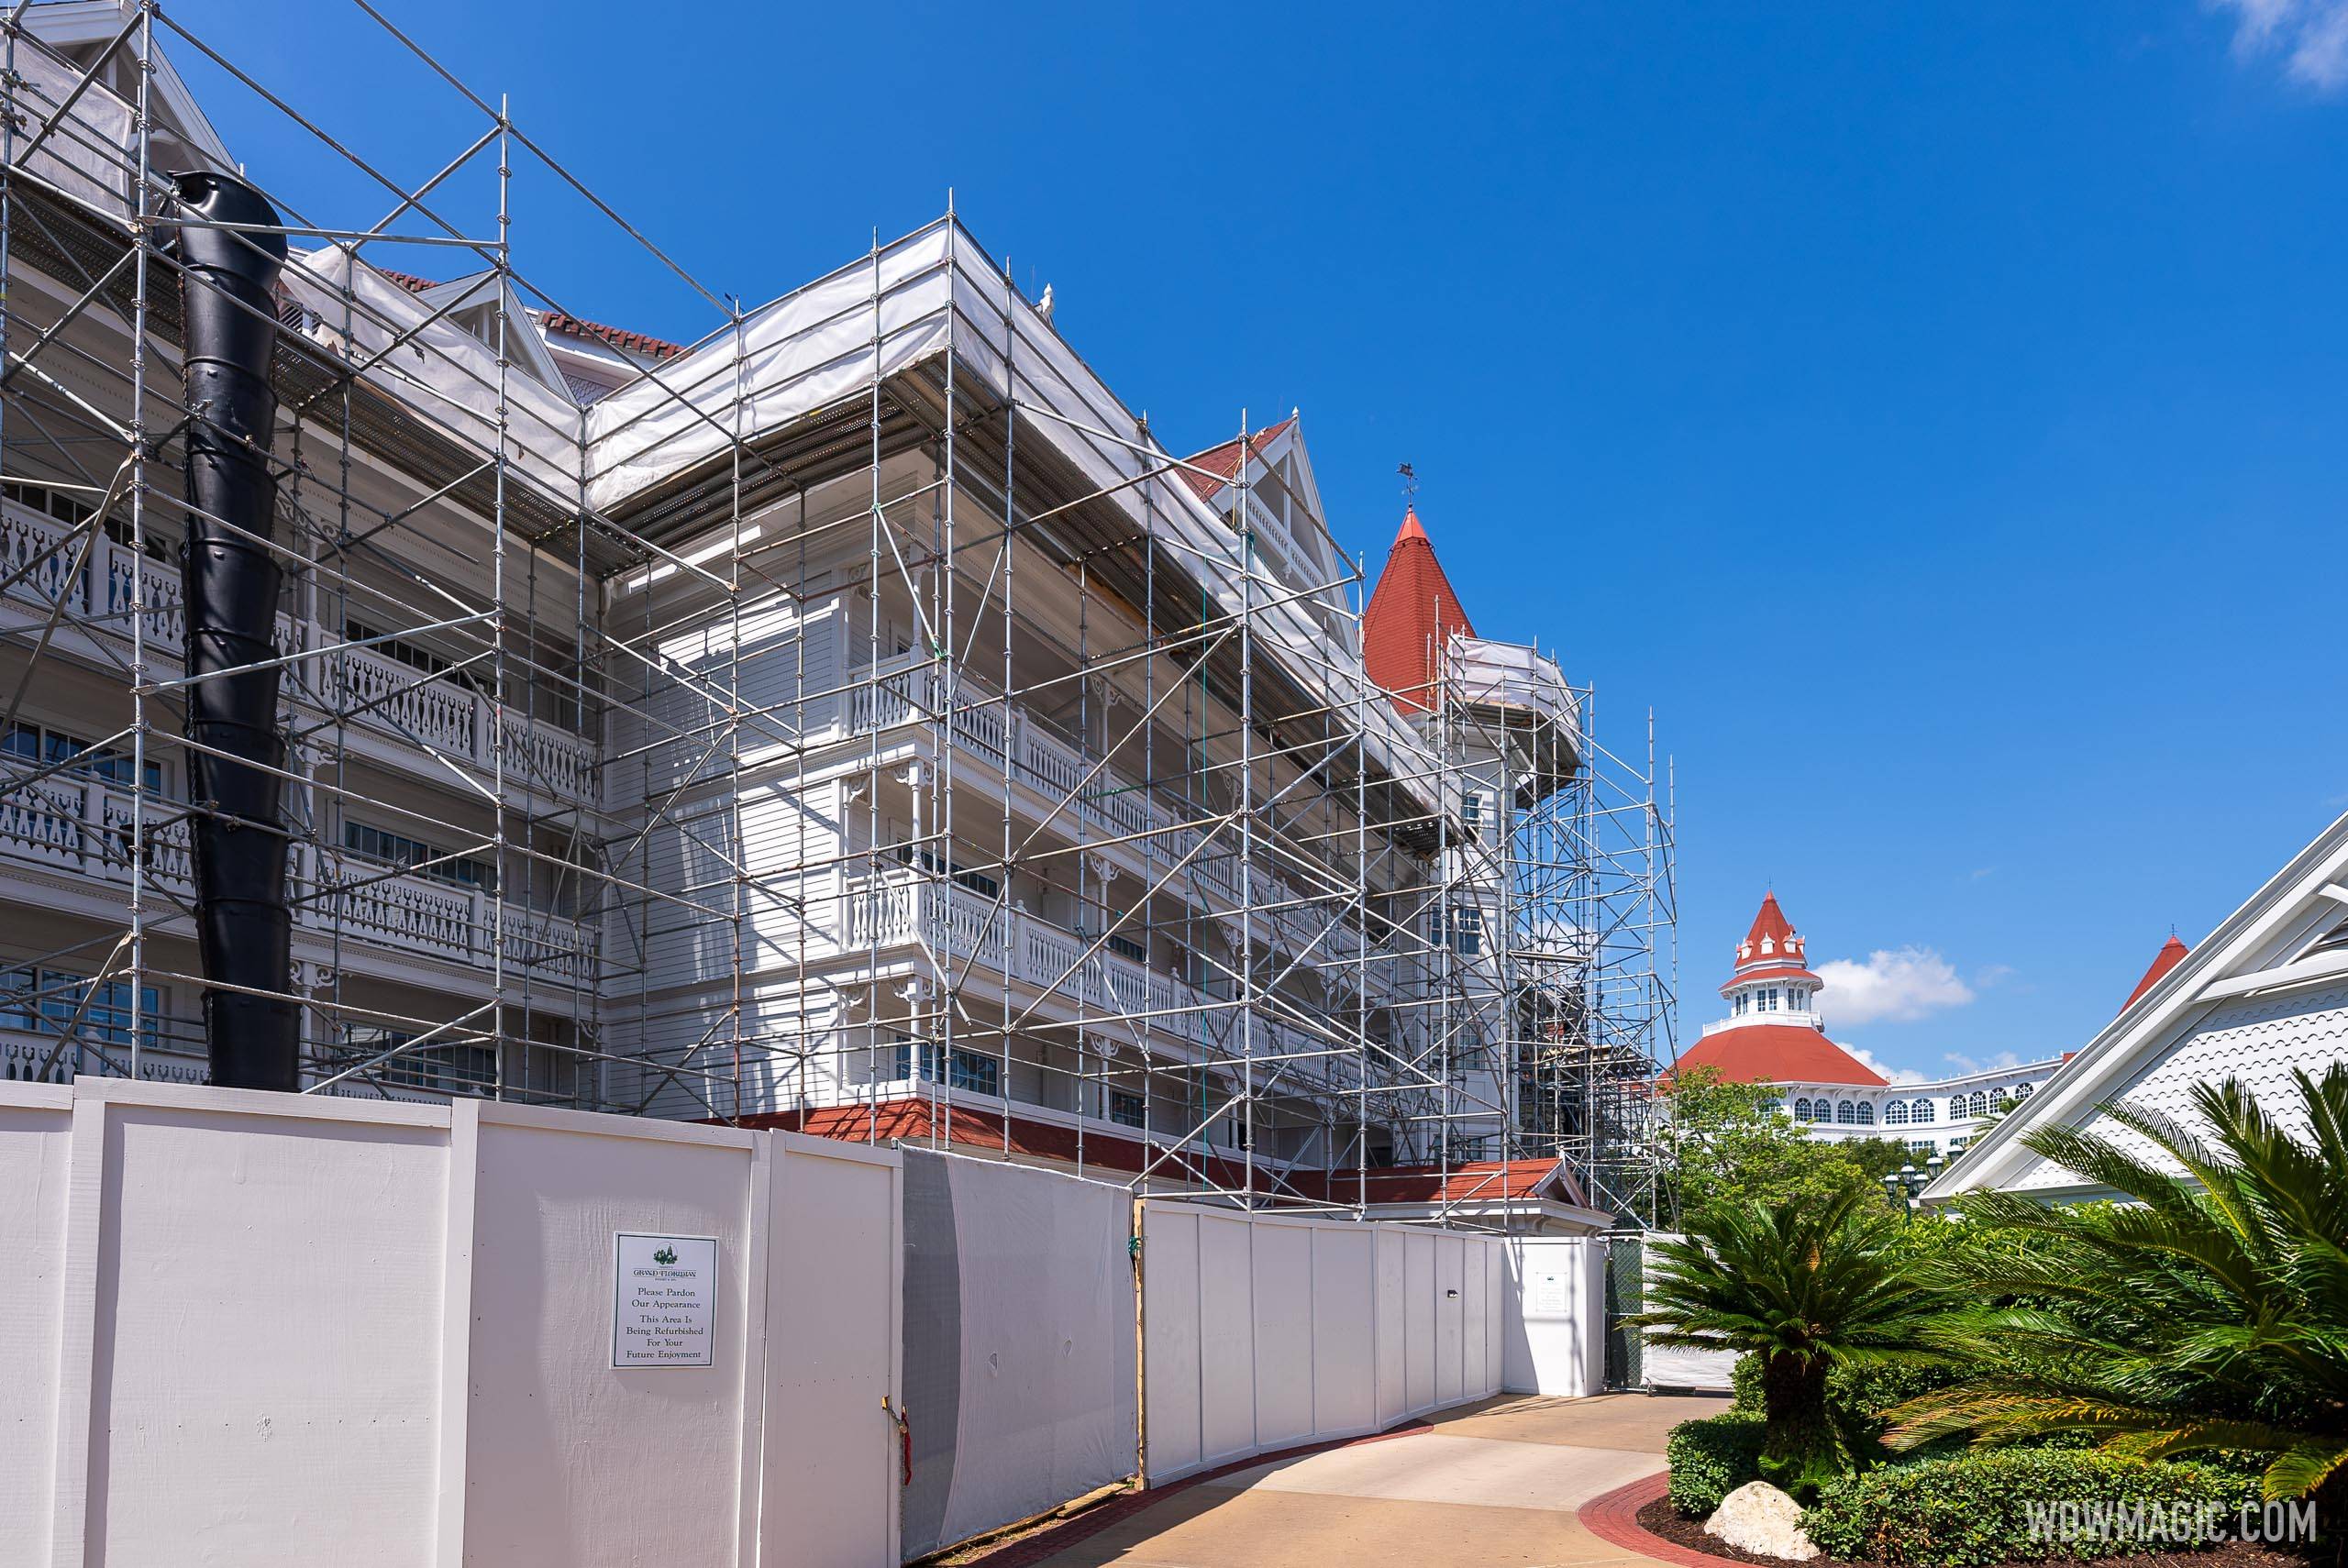 2022 DVC Villas construction at Disney's Grand Floridian Resort - May 18 2022